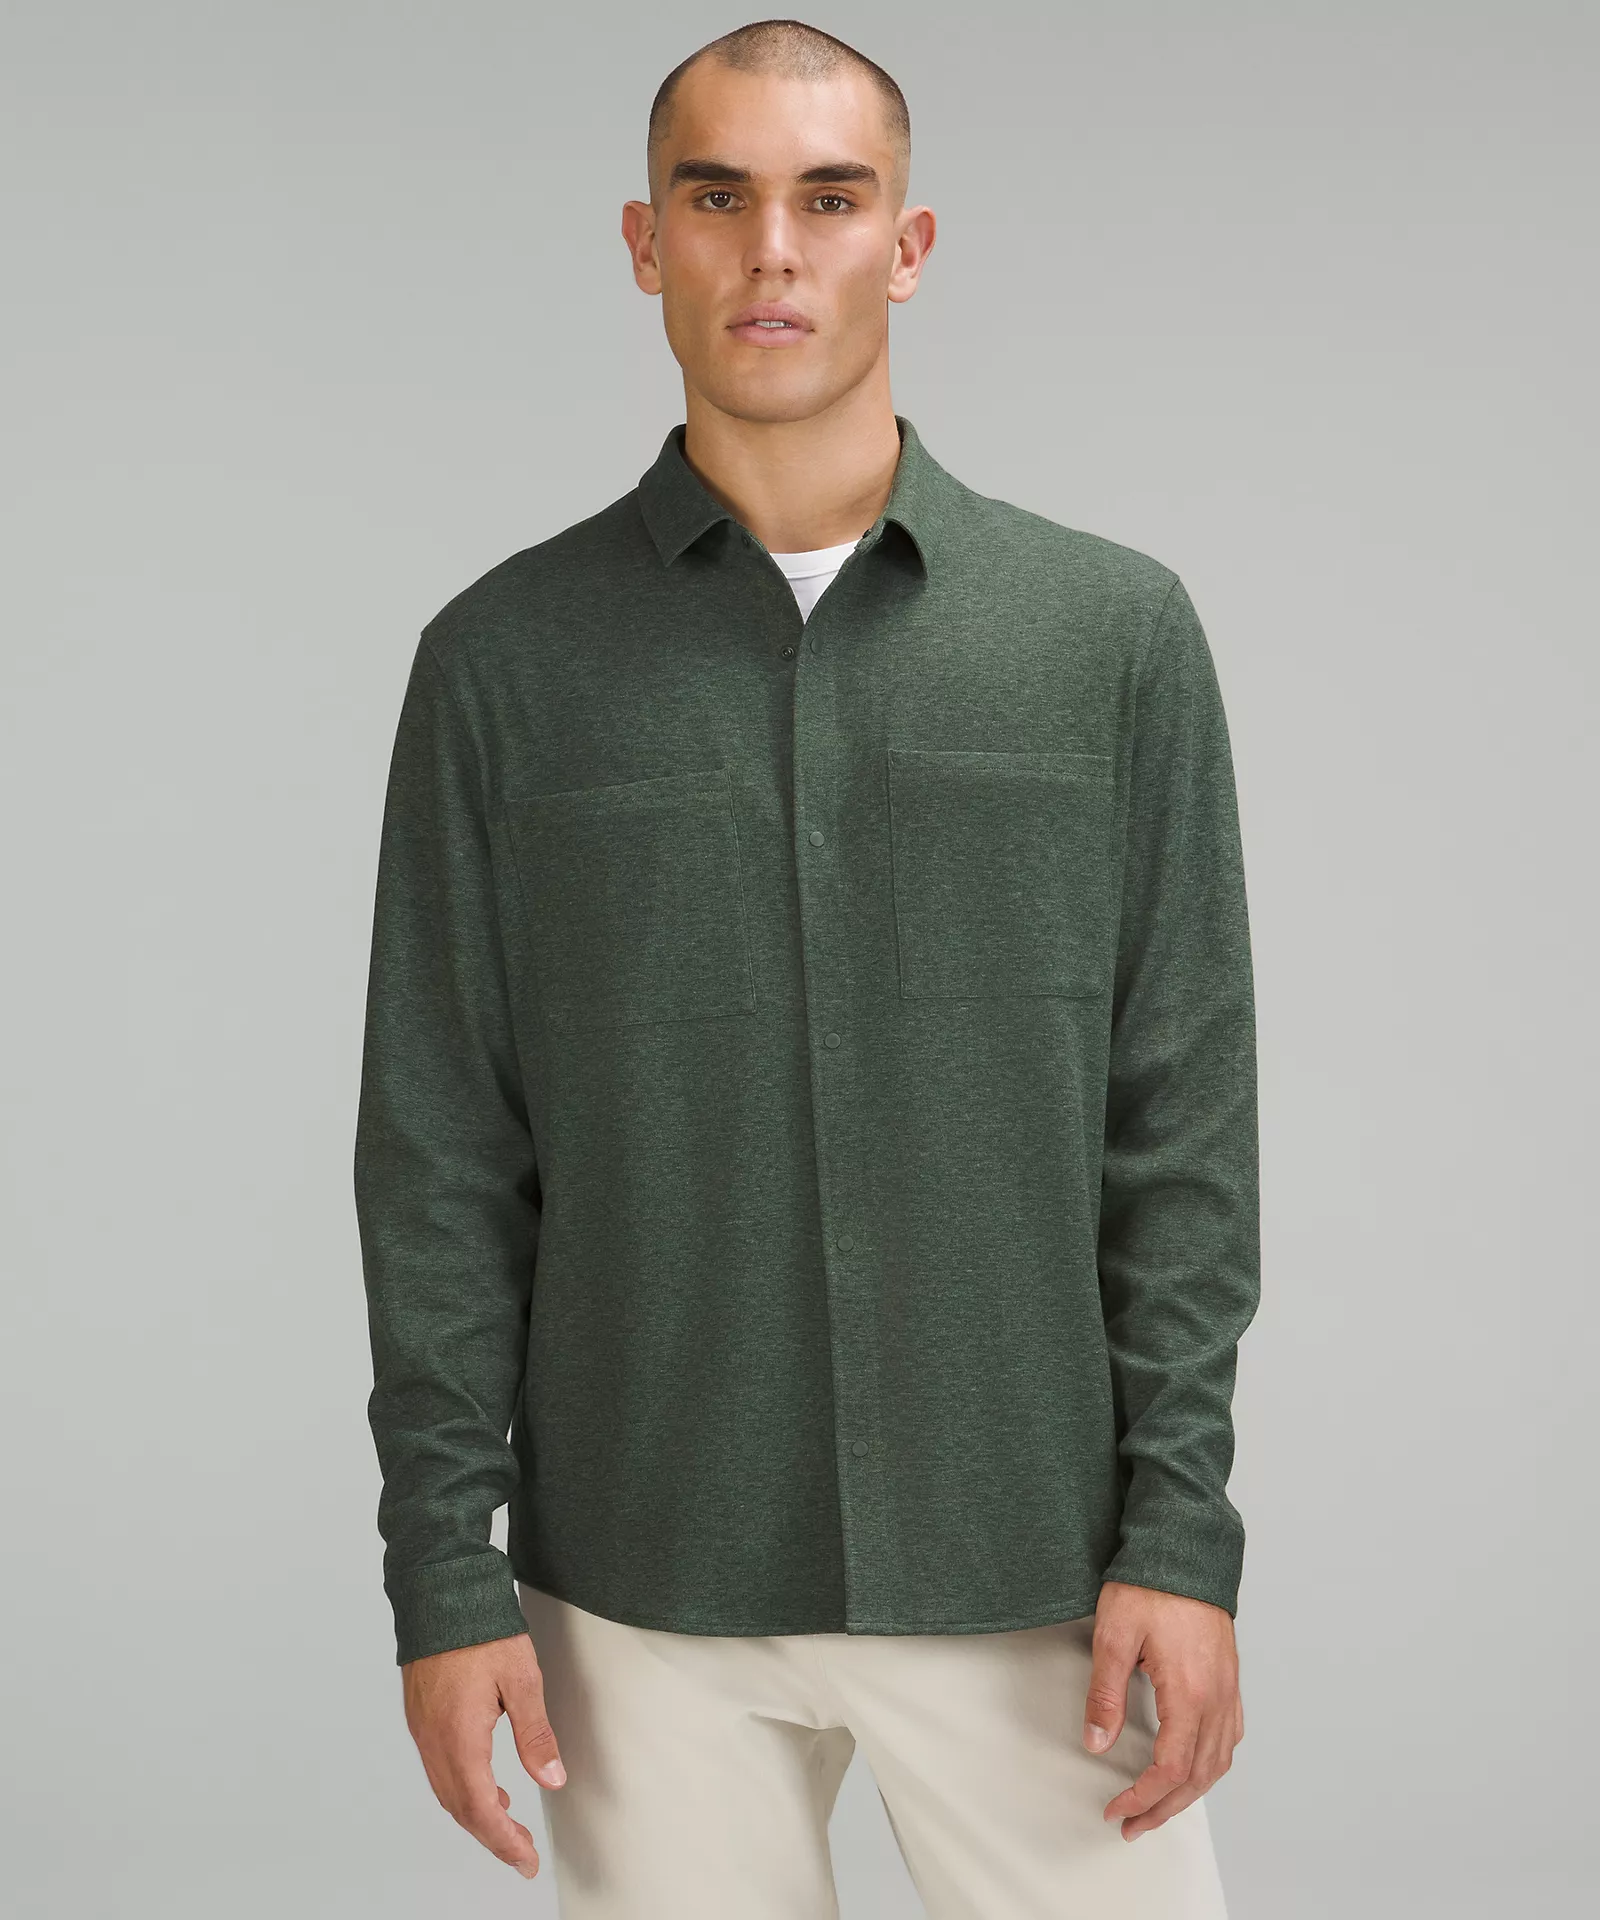 shop.lululemon.com | Soft Knit Overshirt